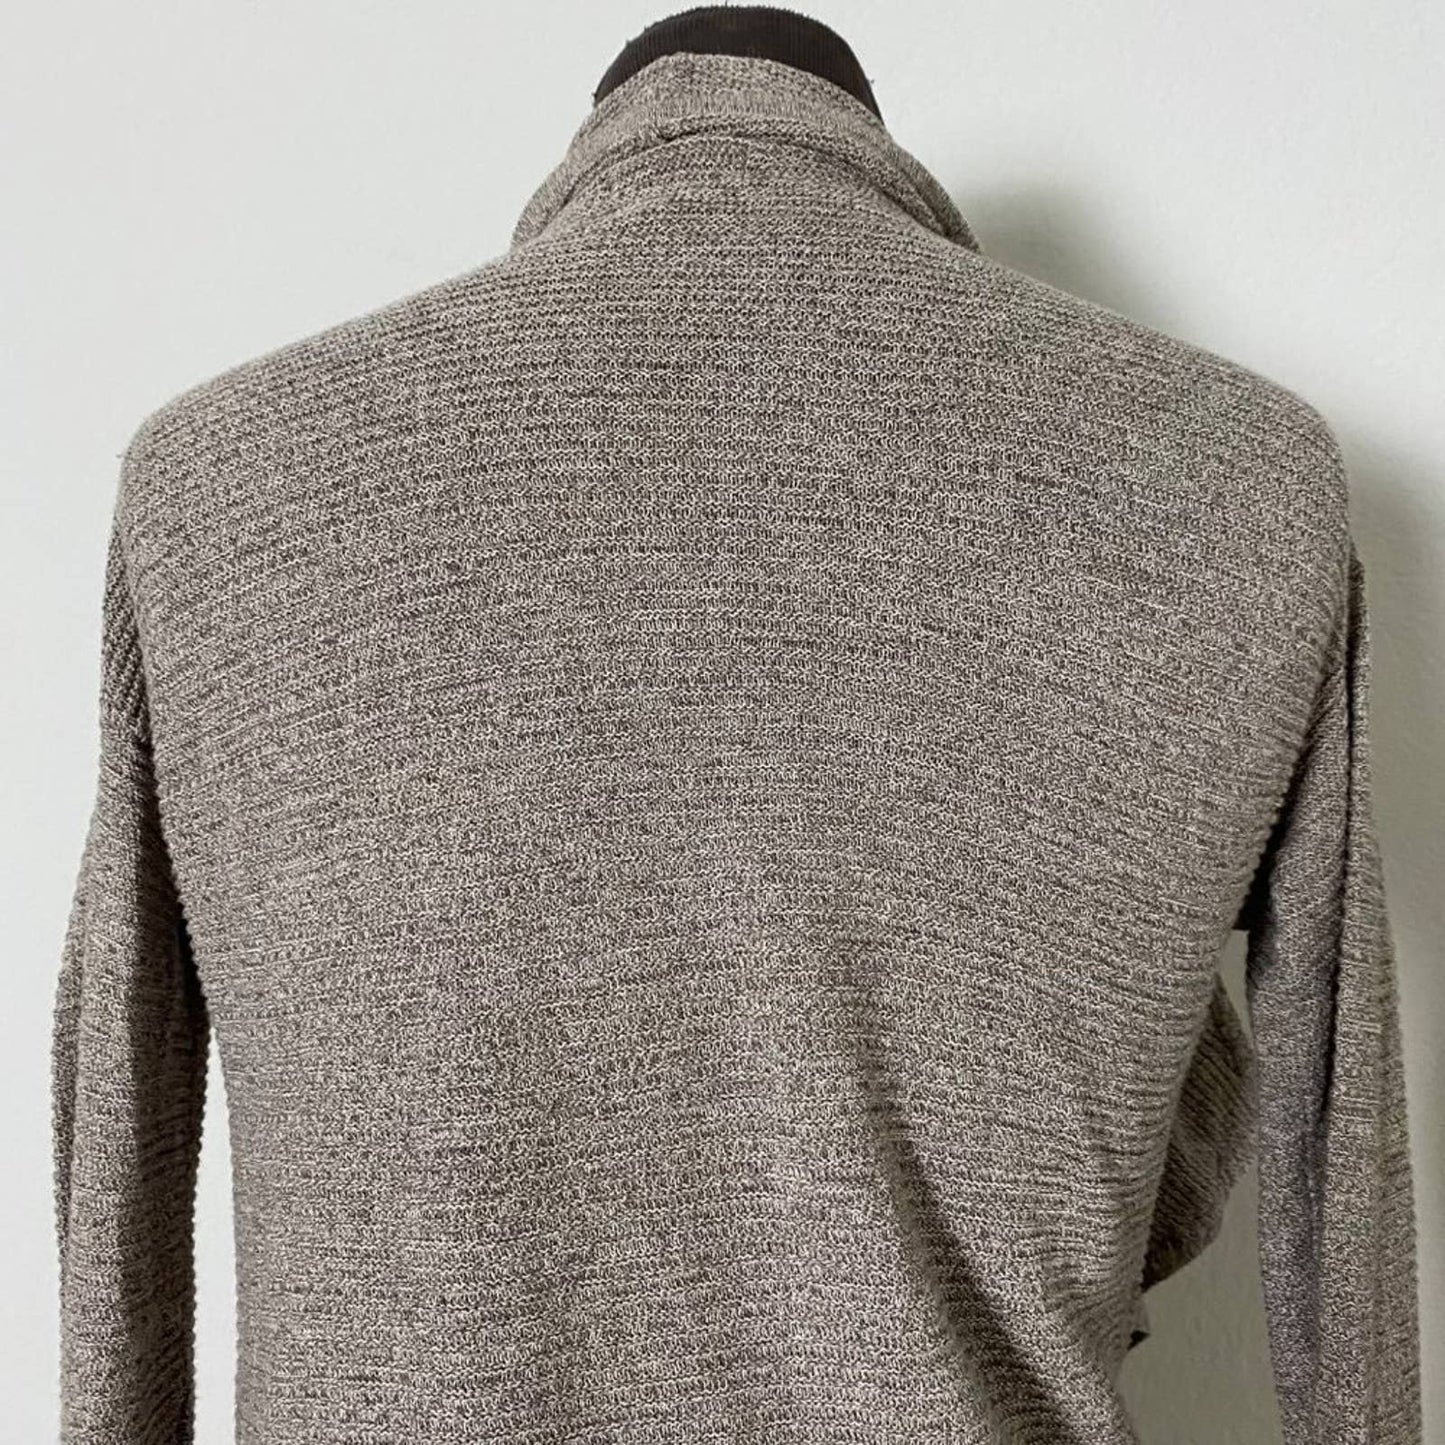 Express sz XS beige 100% Cotton long sleeve knit open cardigan